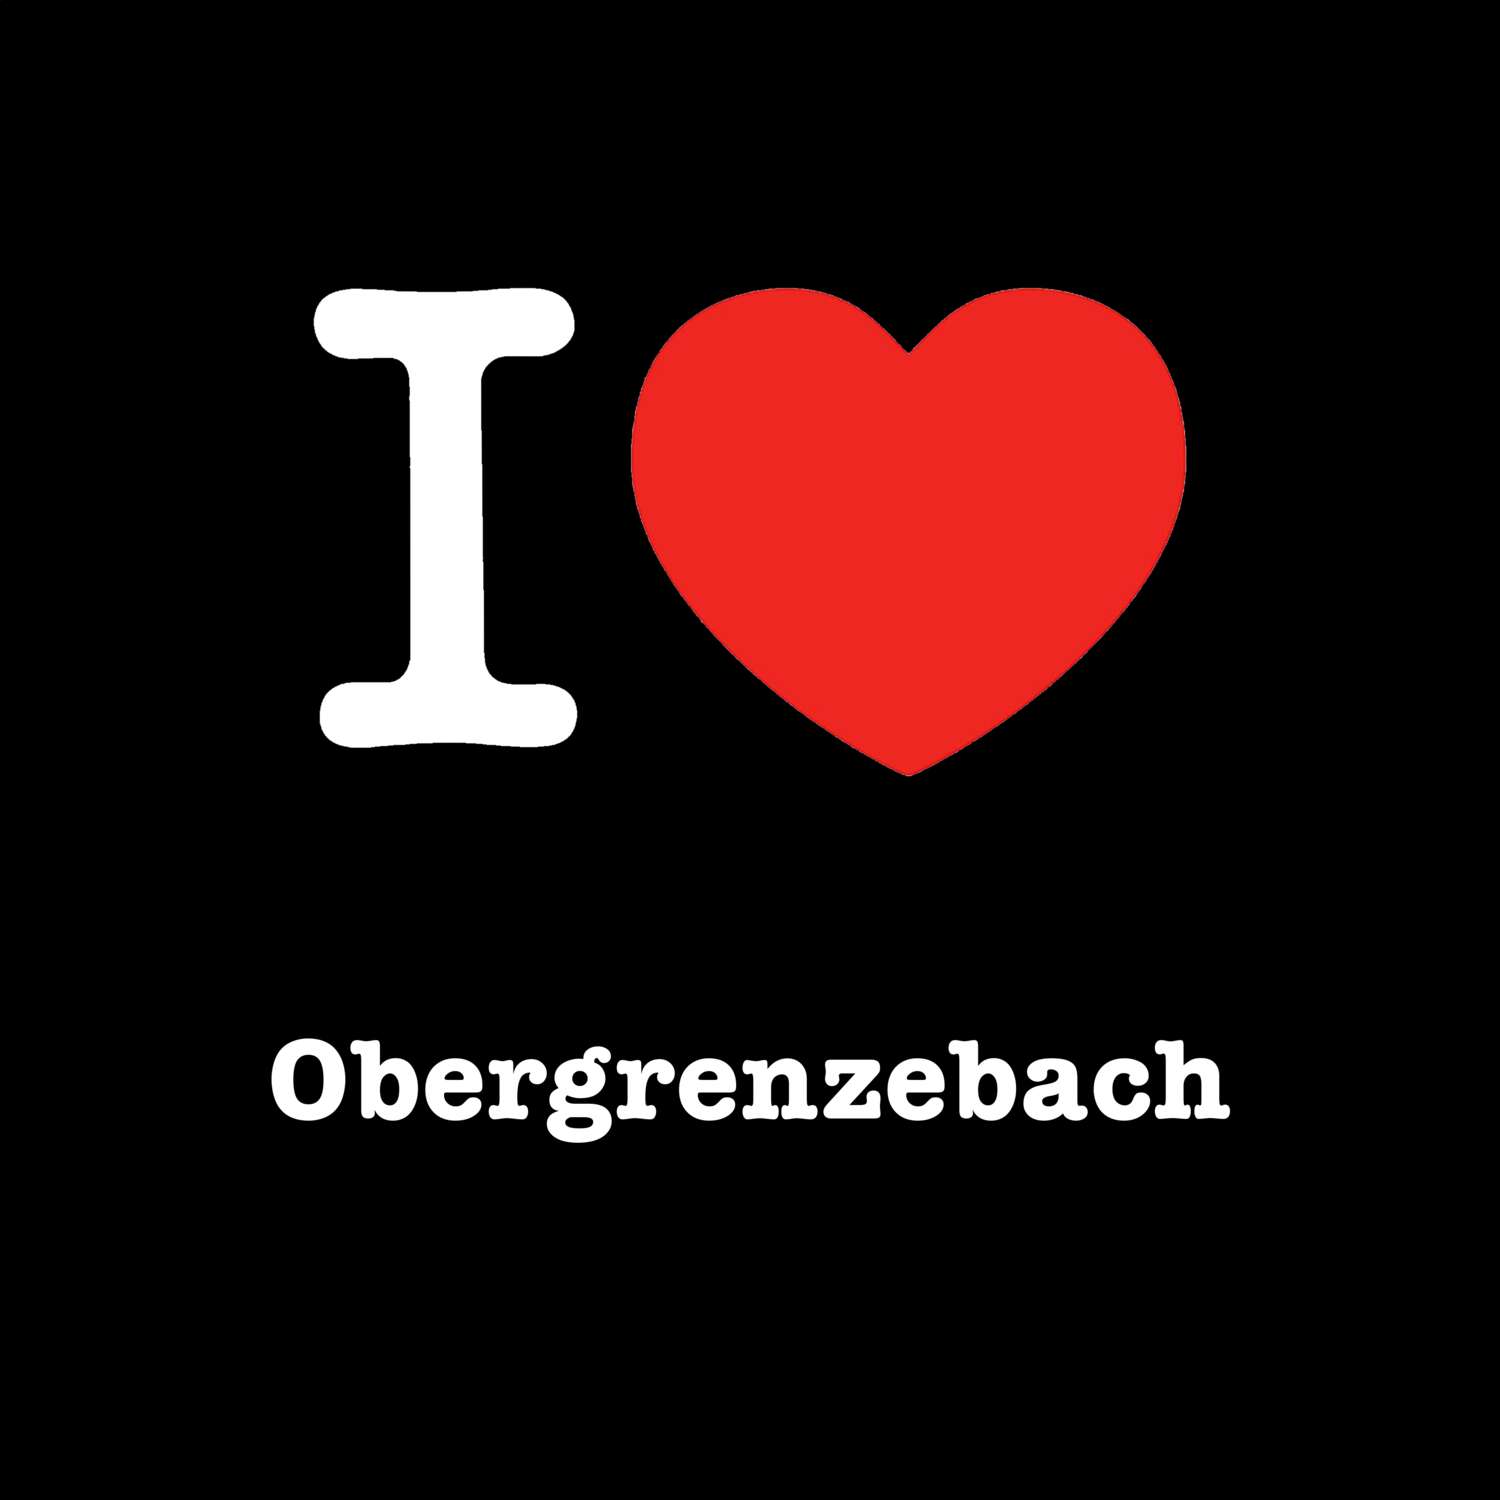 Obergrenzebach T-Shirt »I love«